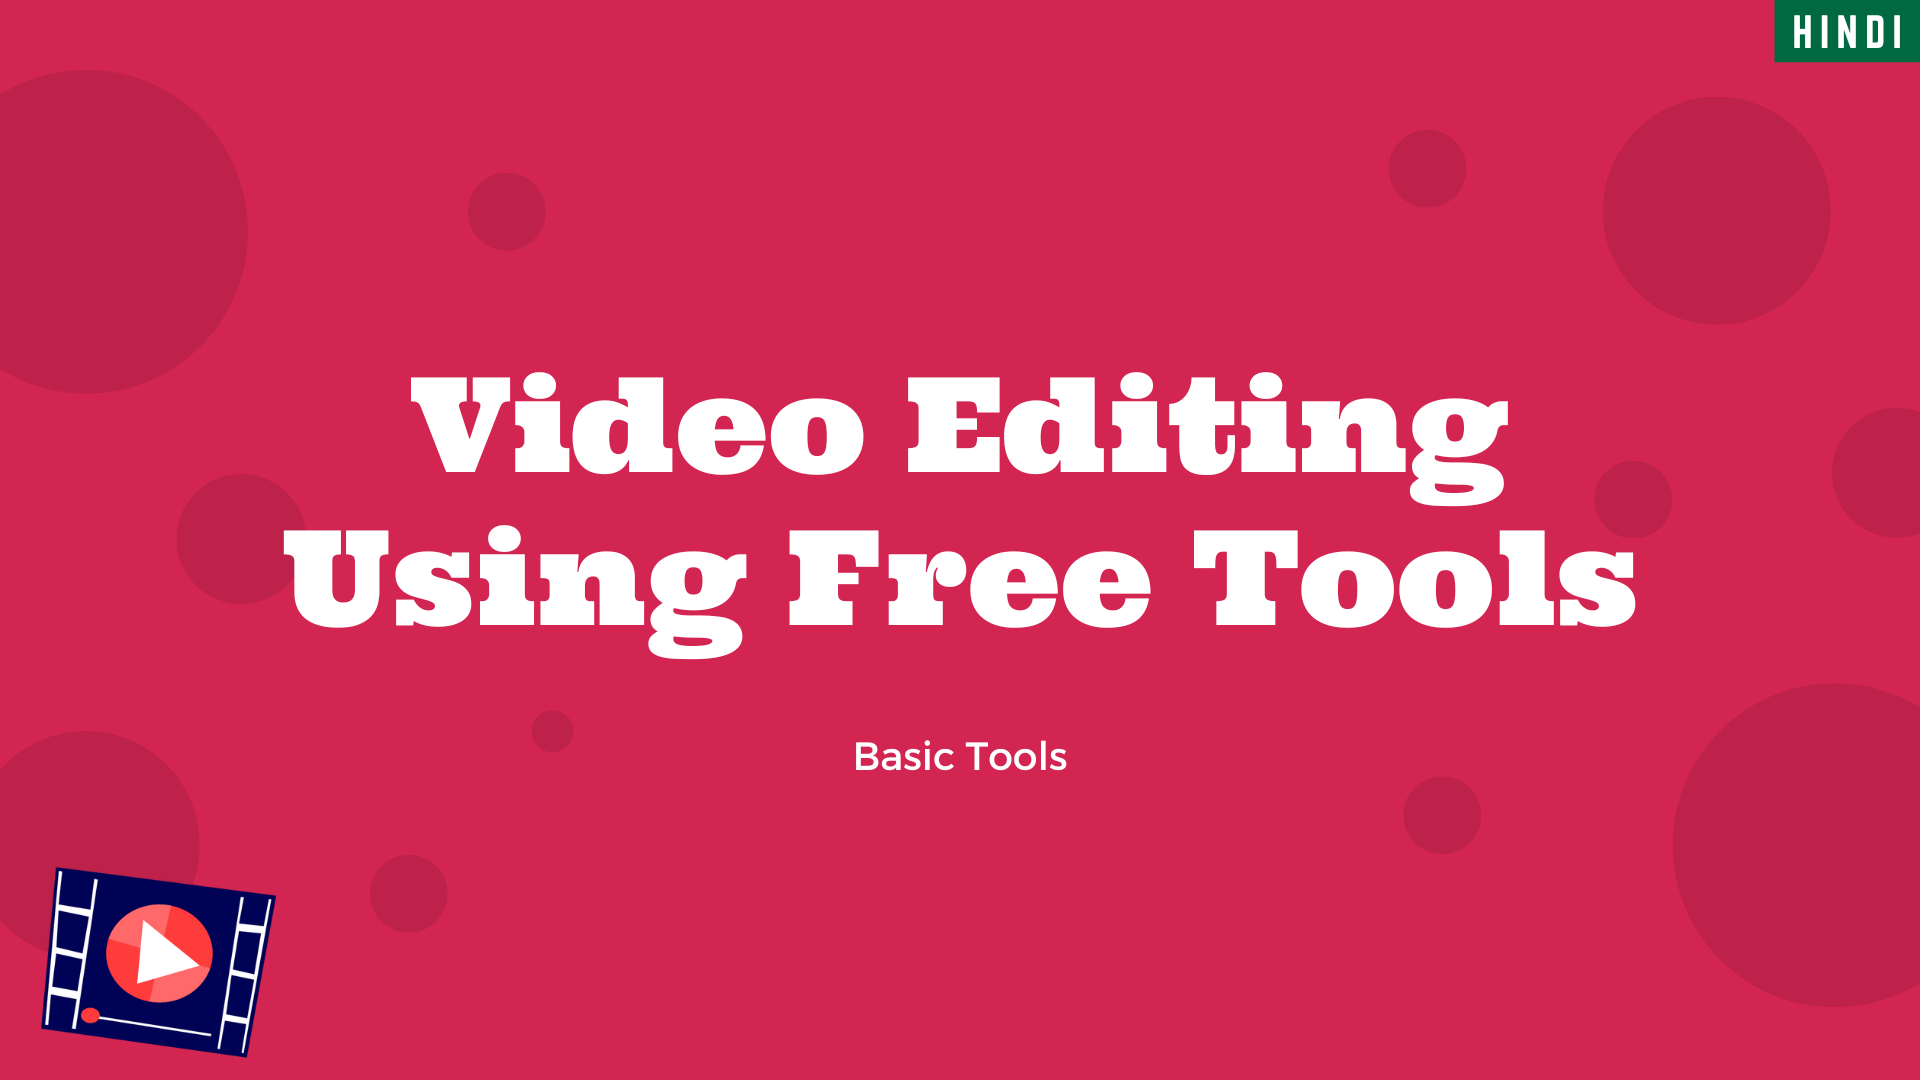 Video Editing Using Free Tools